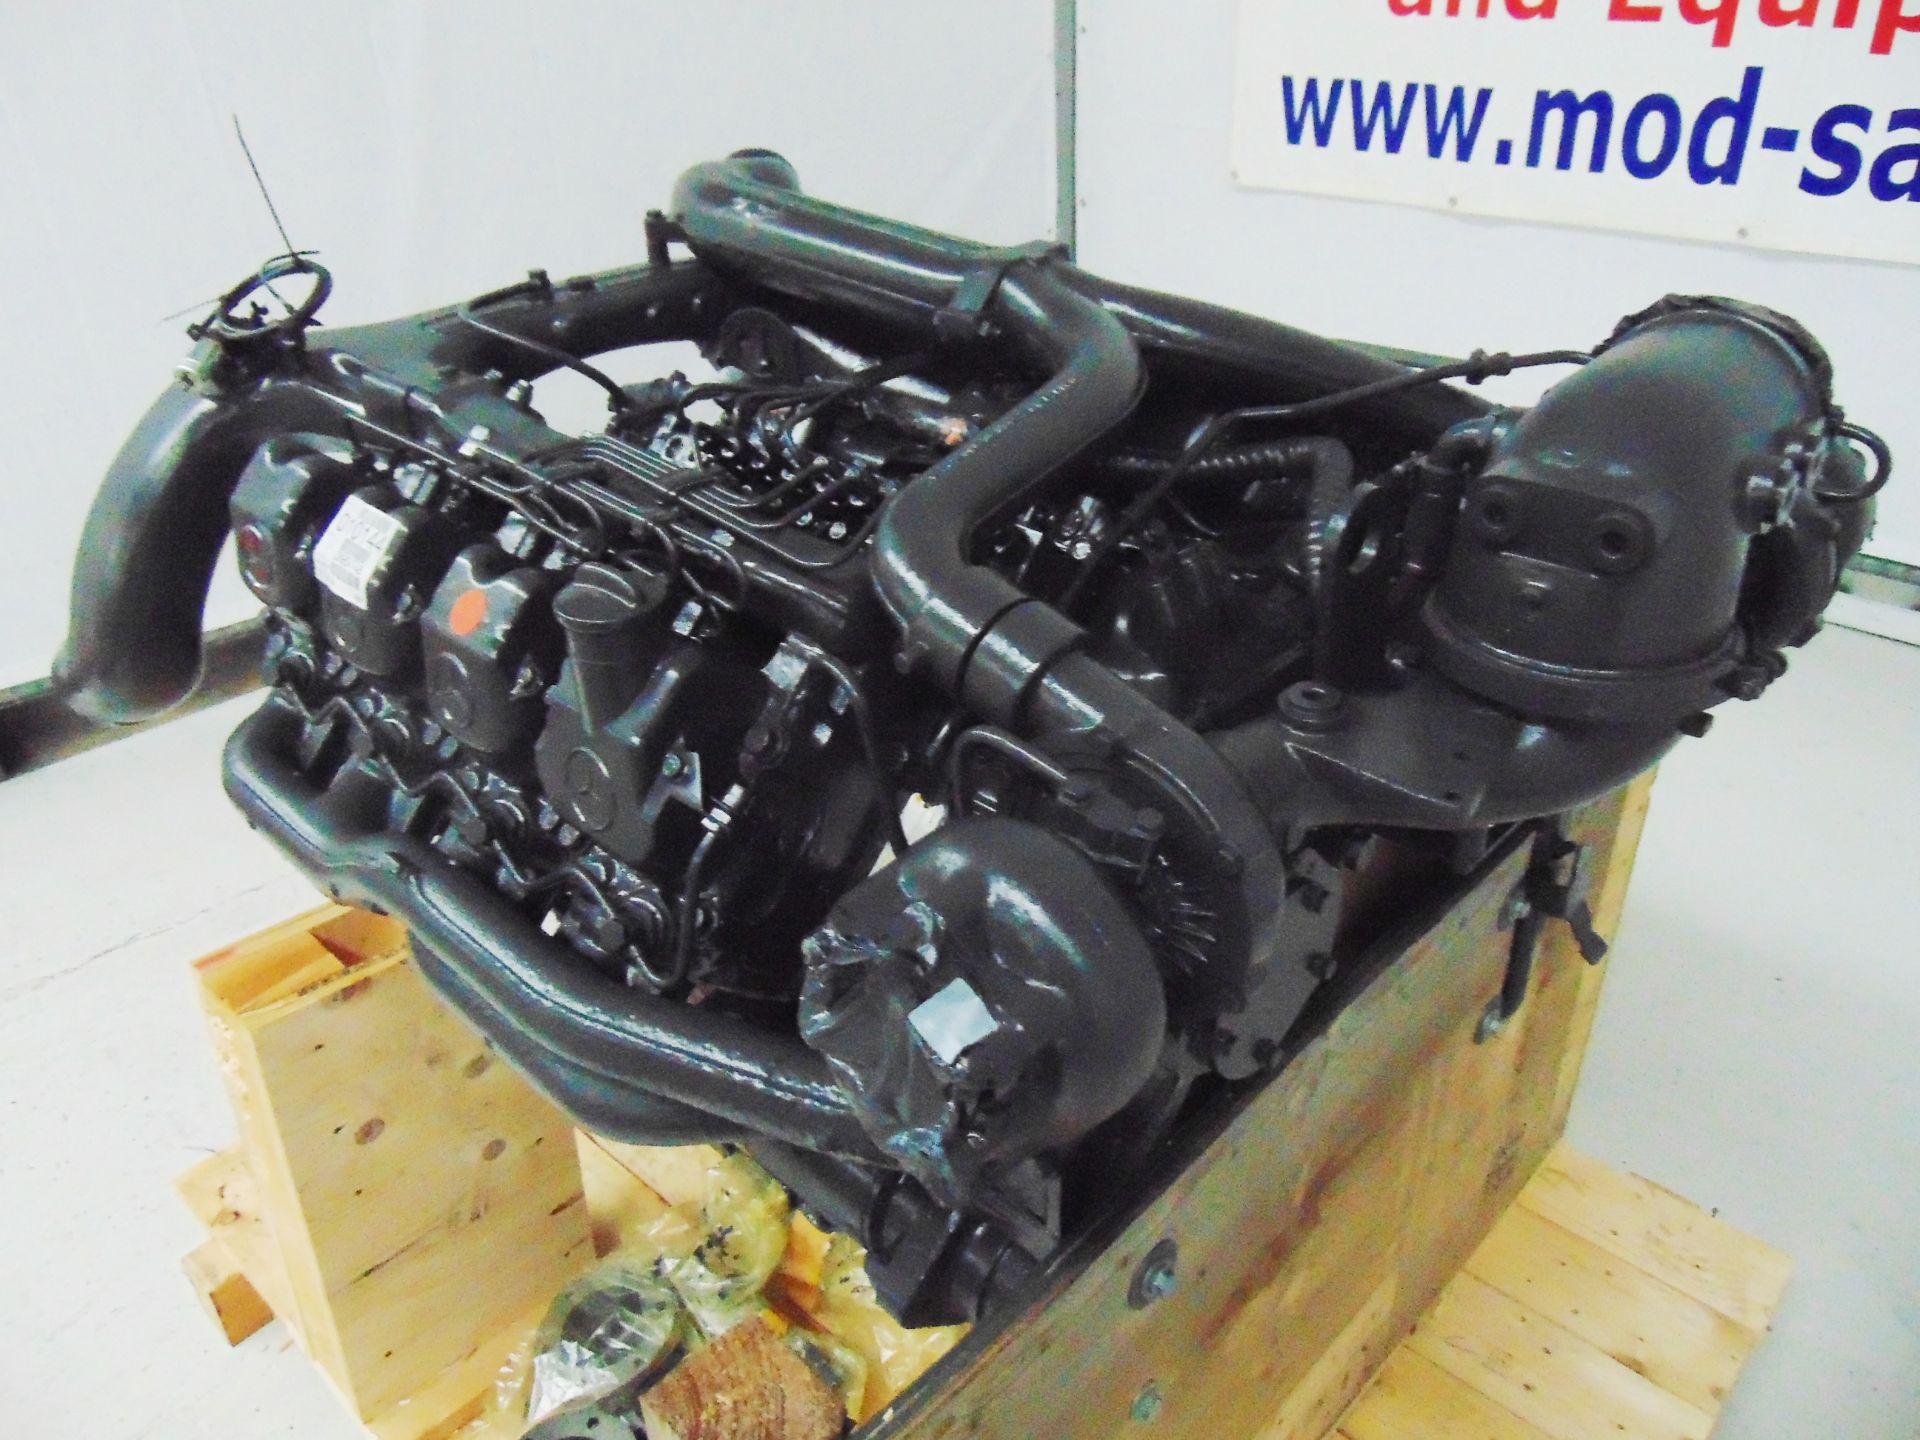 Brand New & Unused Mercedes-Benz OM402LA V8 Twin Turbo Diesel Engine - Image 12 of 13